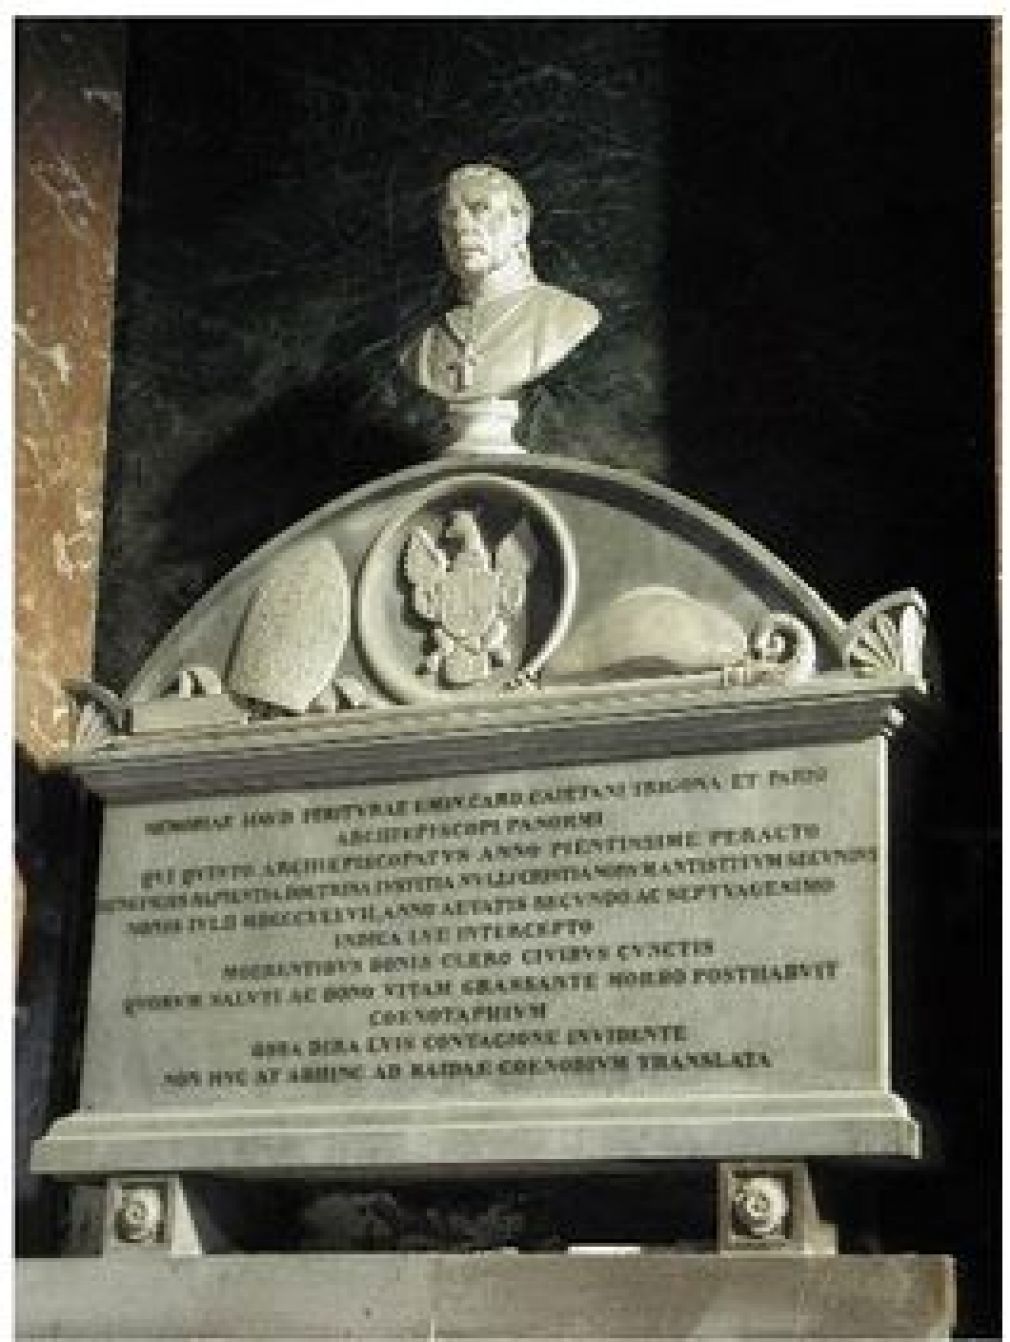 1818 Il cardinale Gaetano Maria Trigona